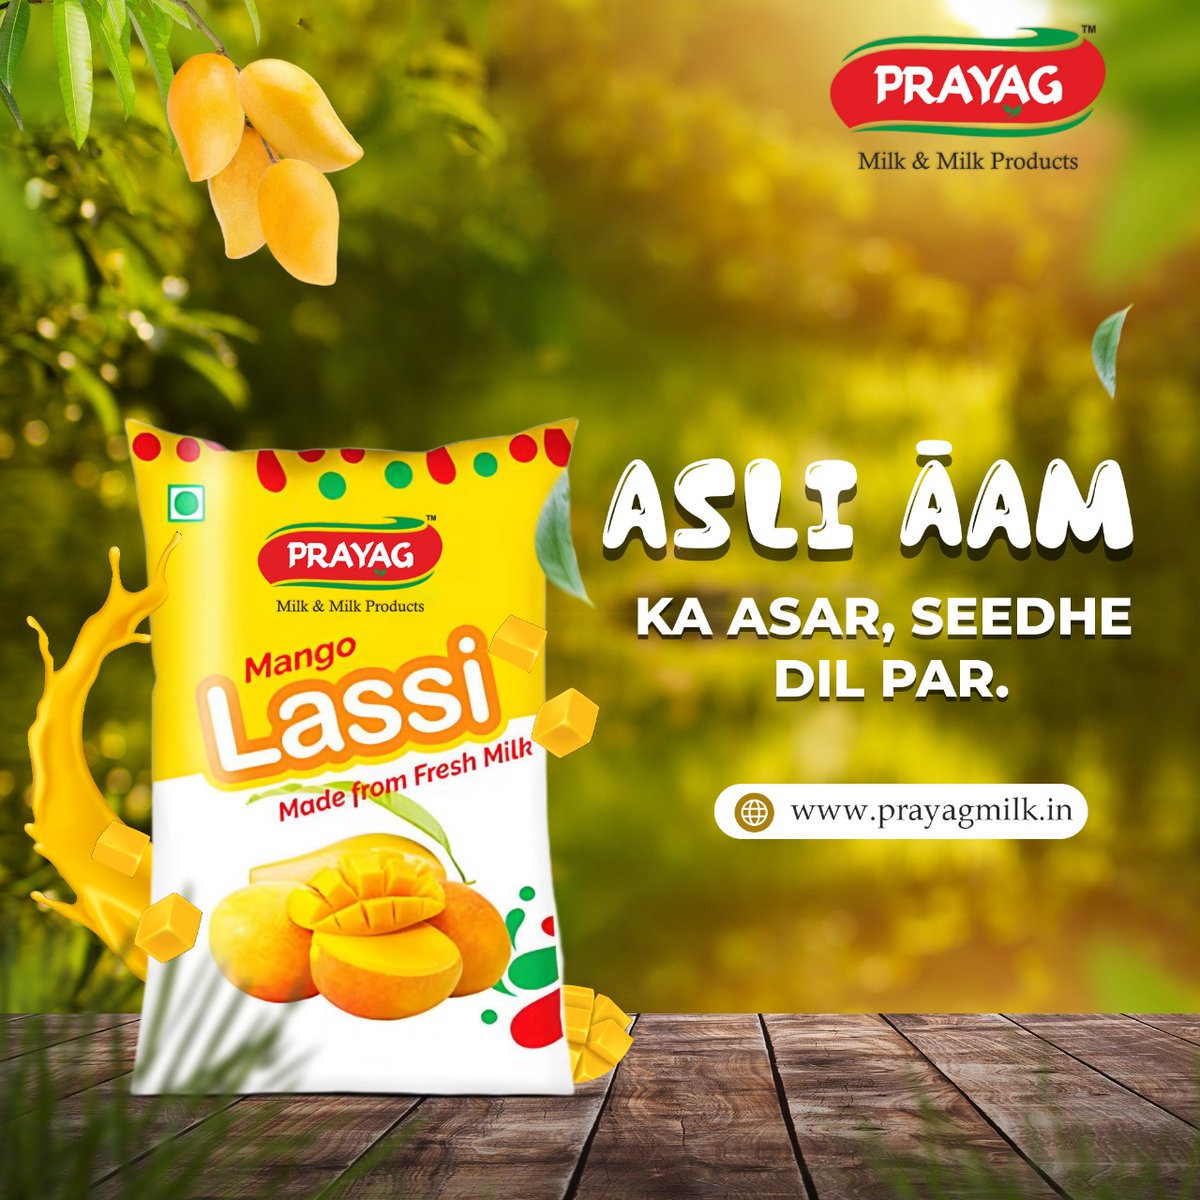 Real mango, real impact! 🥭 Try Prayag Milk's Mango Lassi, loaded with chunks of real mango for a burst of flavor. The perfect refreshment on hot summer days.
.
#MangoLassi #RealMango #TasteTheRealFlavor #PurePrayagMilk #PrayagmilkBareilly #PrayagPurity #Prayagmilk